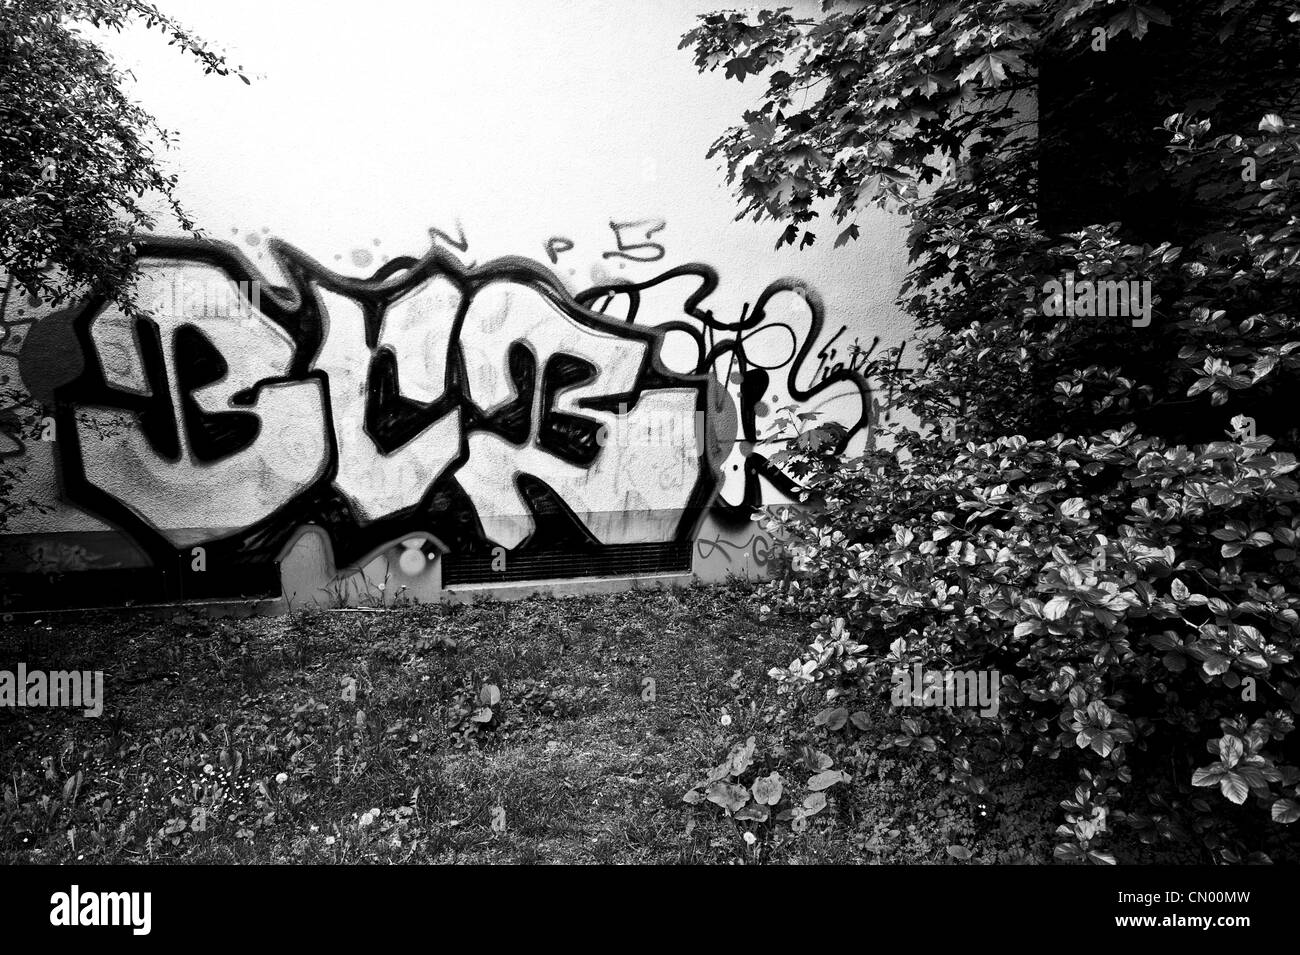 A black and white image of graffiti. Stock Photo